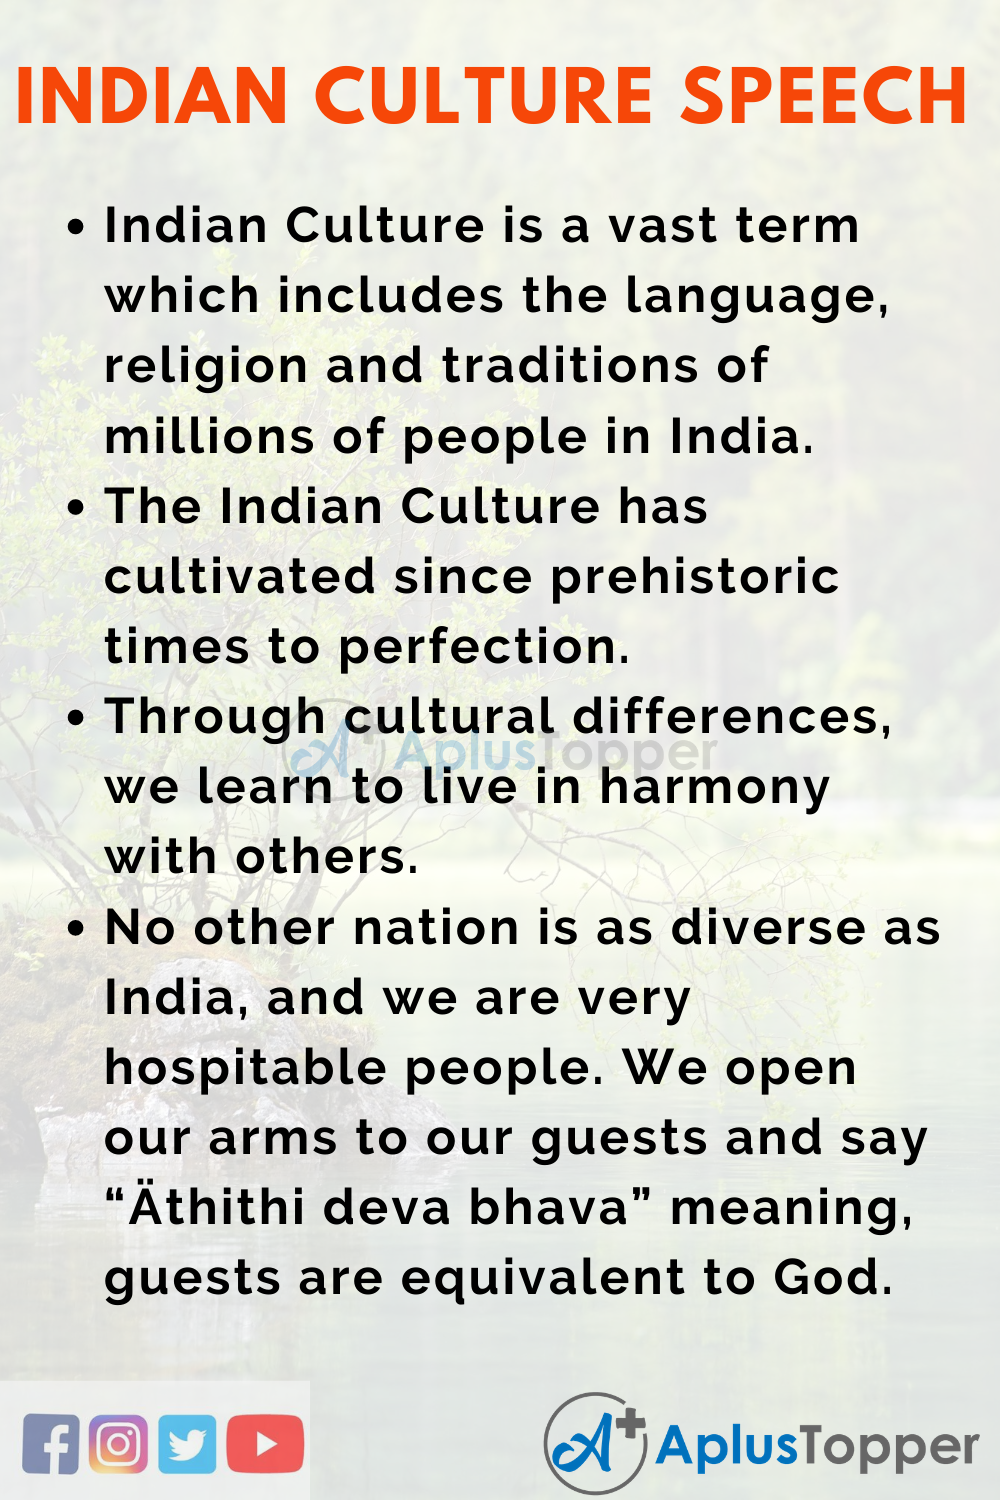 essay on india's cultural diversity